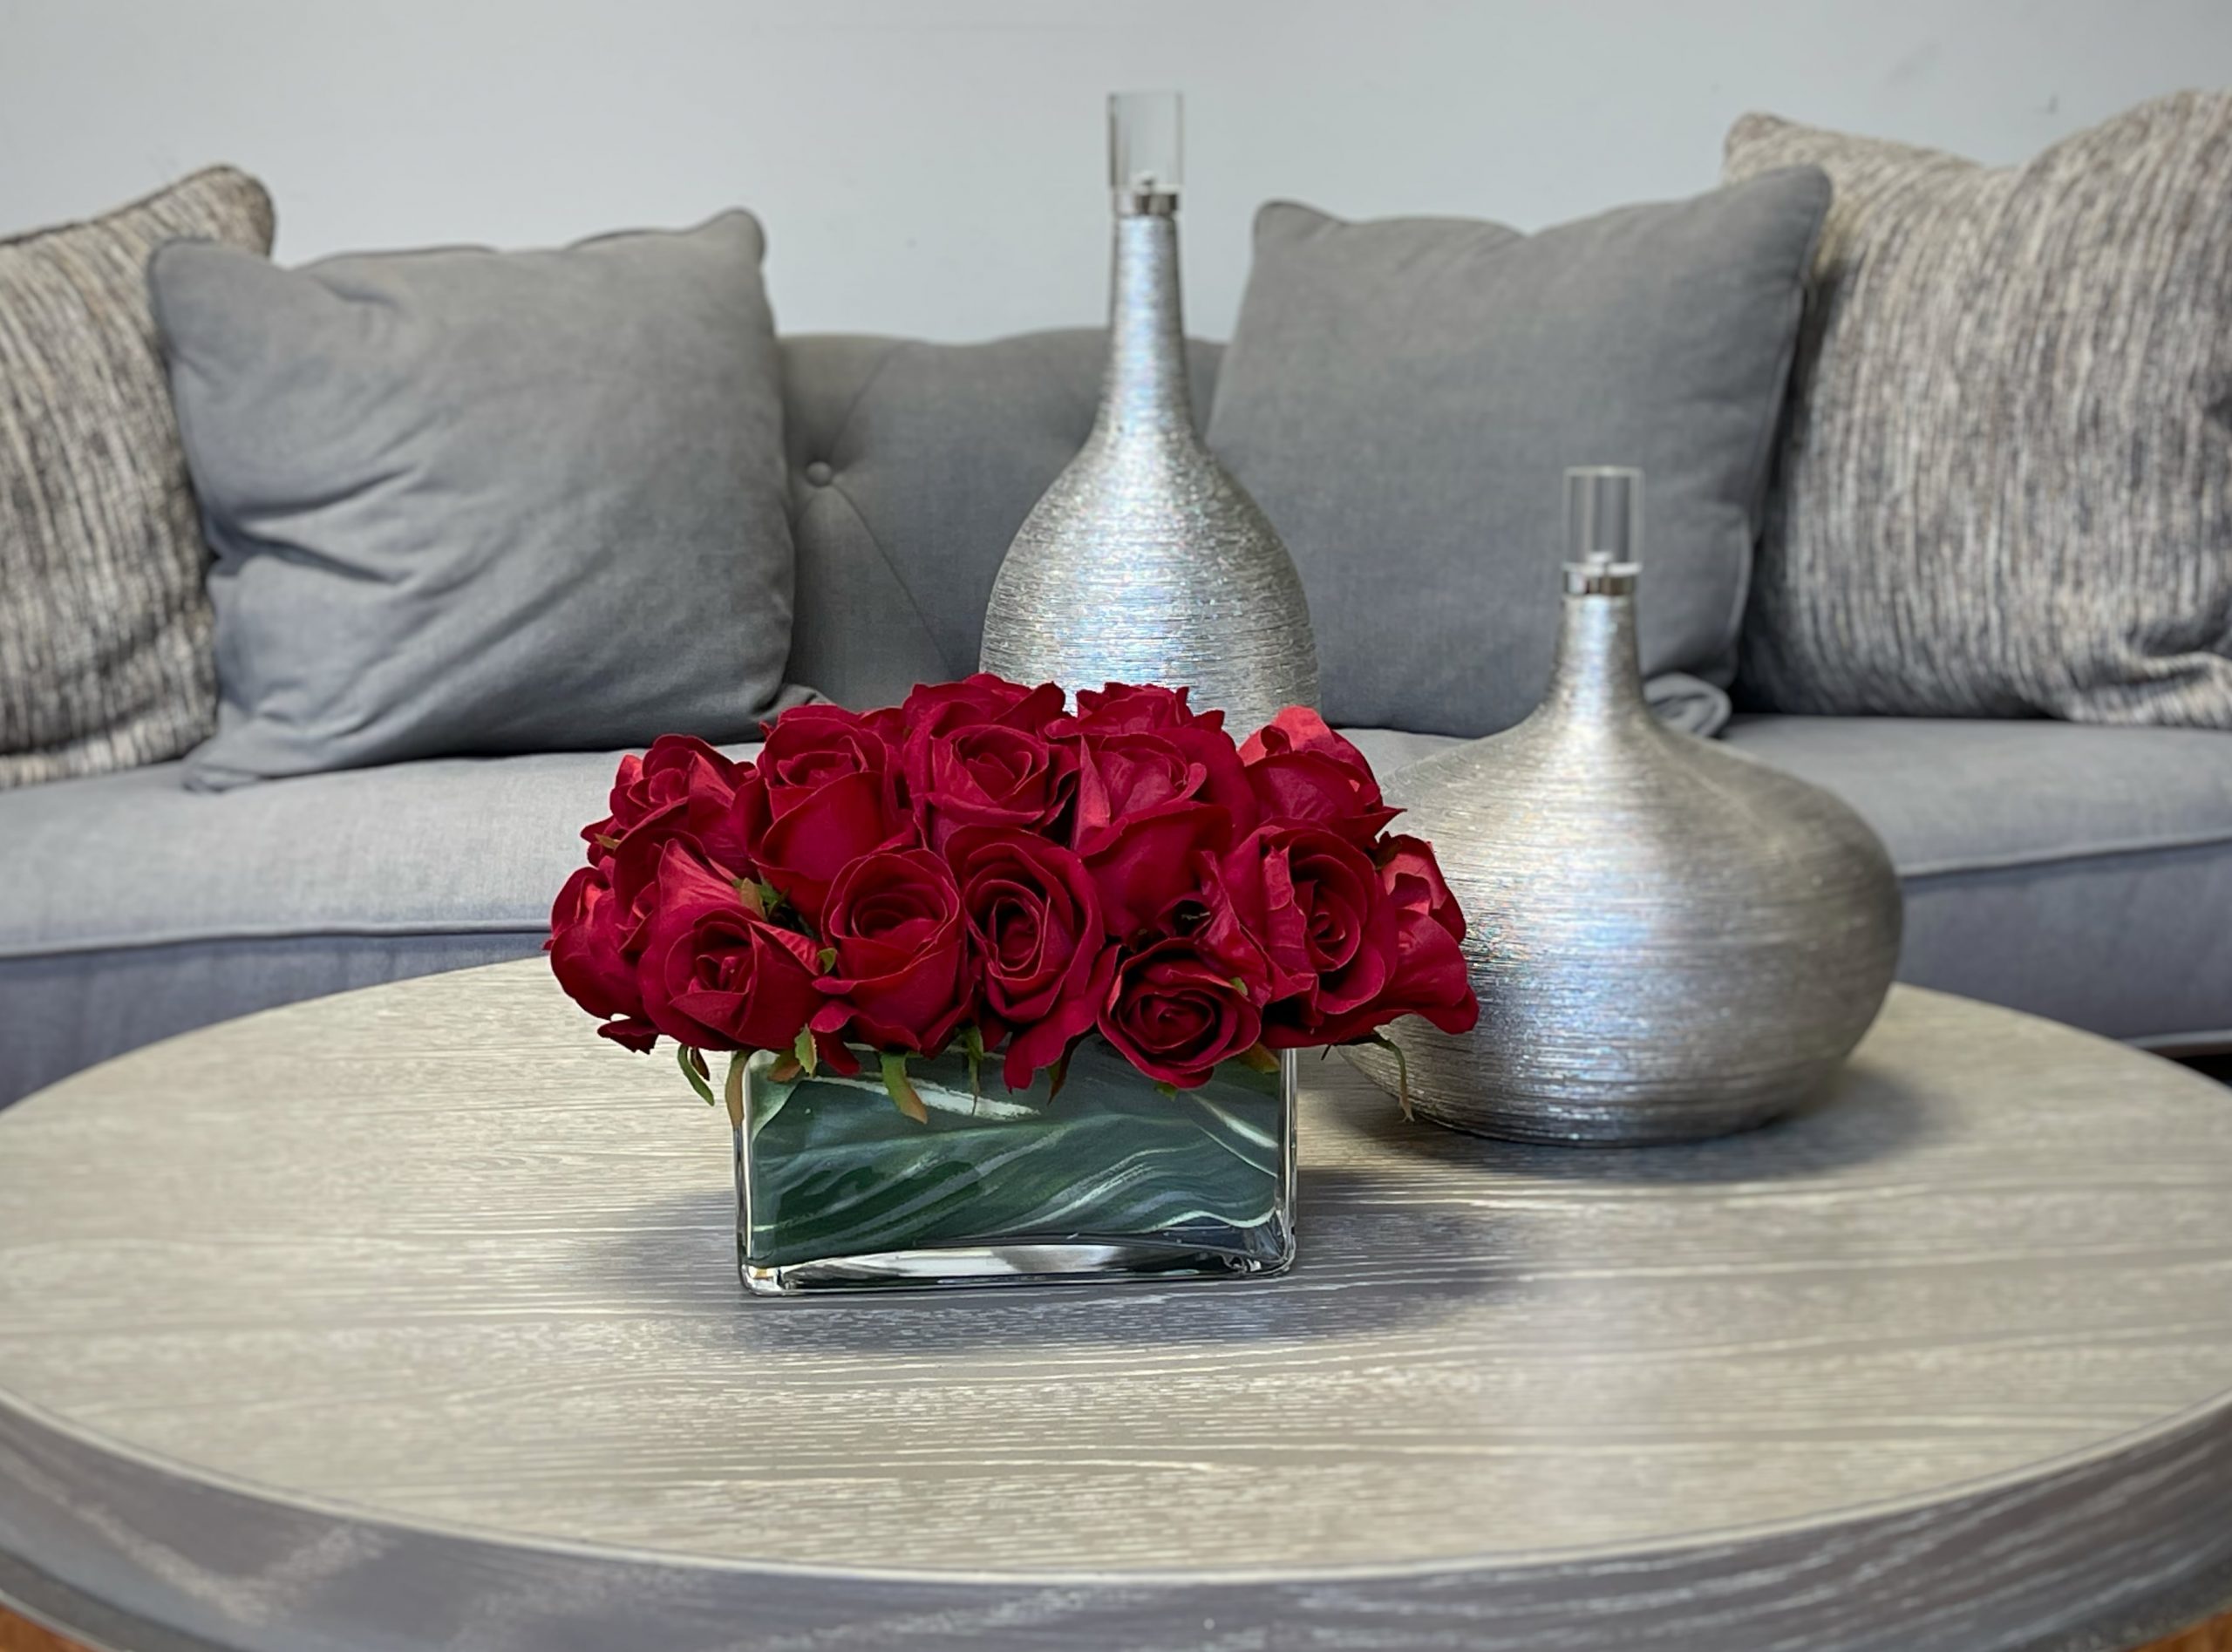 Creative Displays Red Rose Floral Arrangement